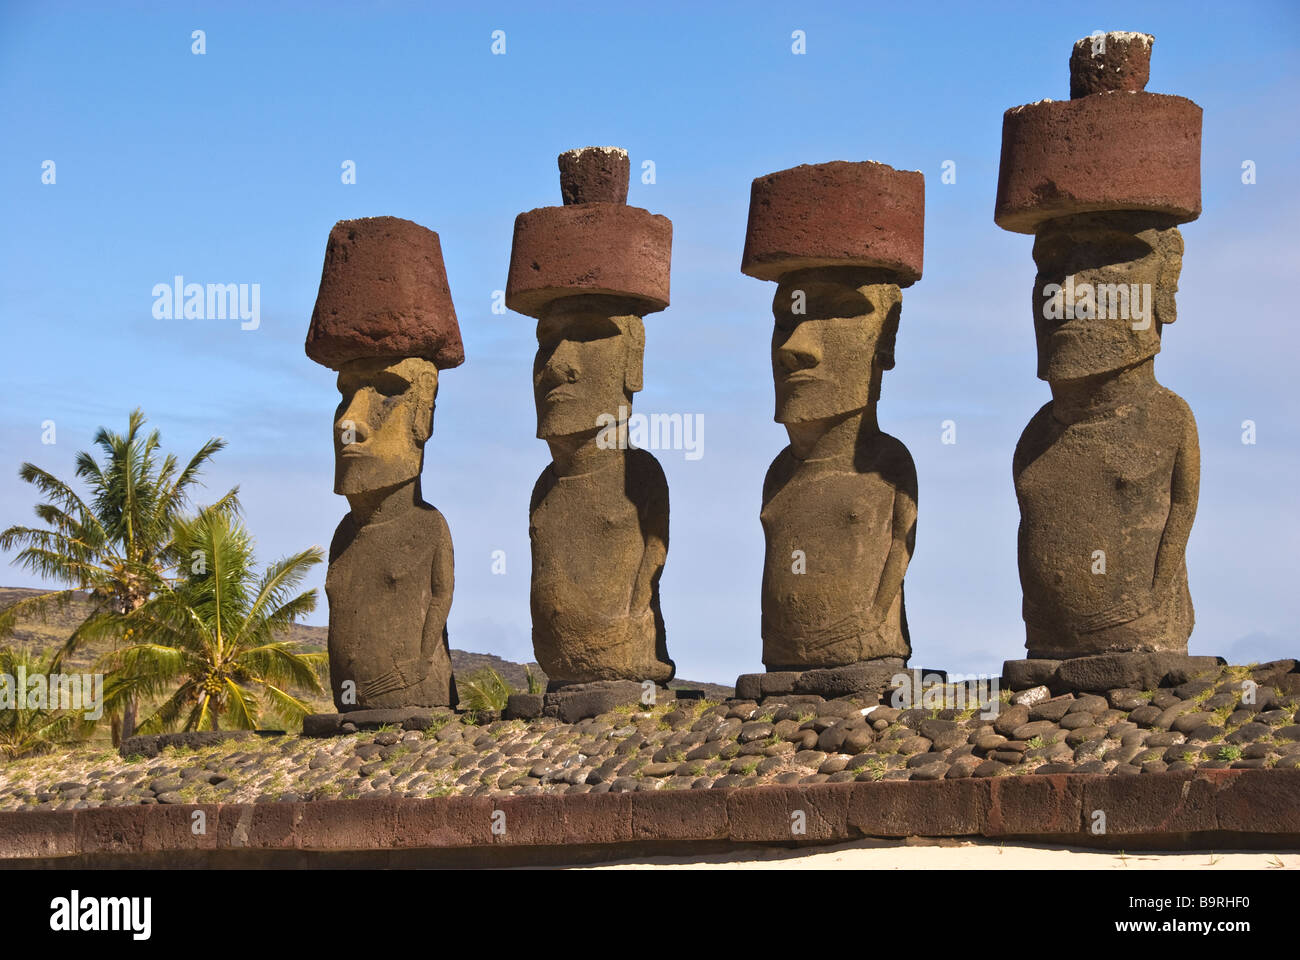 Elk198 5208 Cile Isola di Pasqua Anakena Ahu Nau Nau moai statue Foto Stock